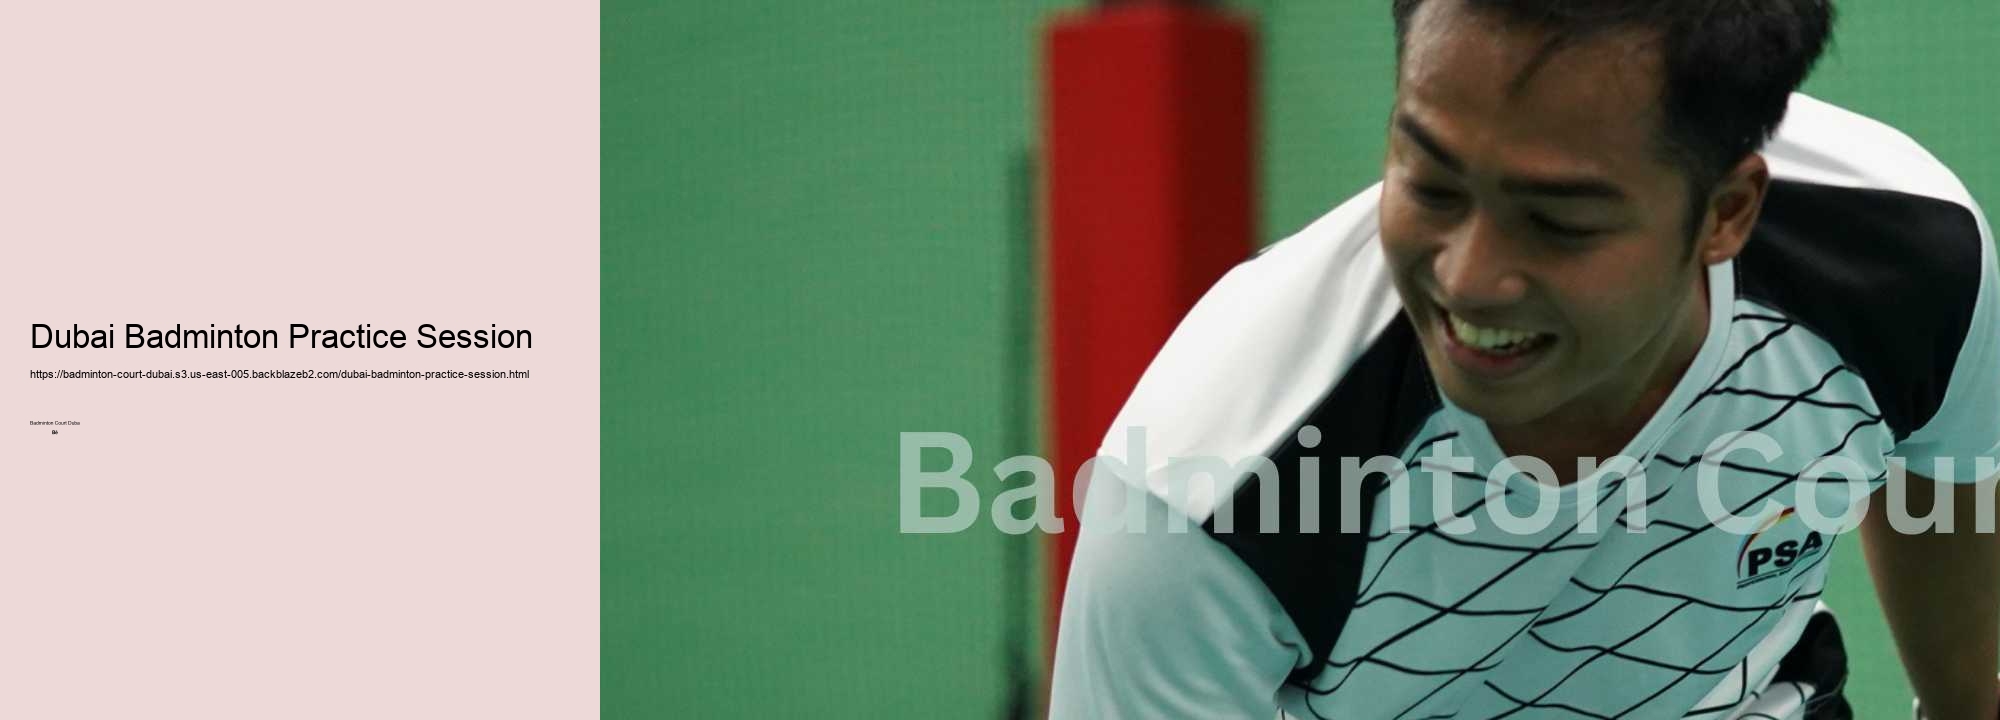 Dubai Badminton Practice Session